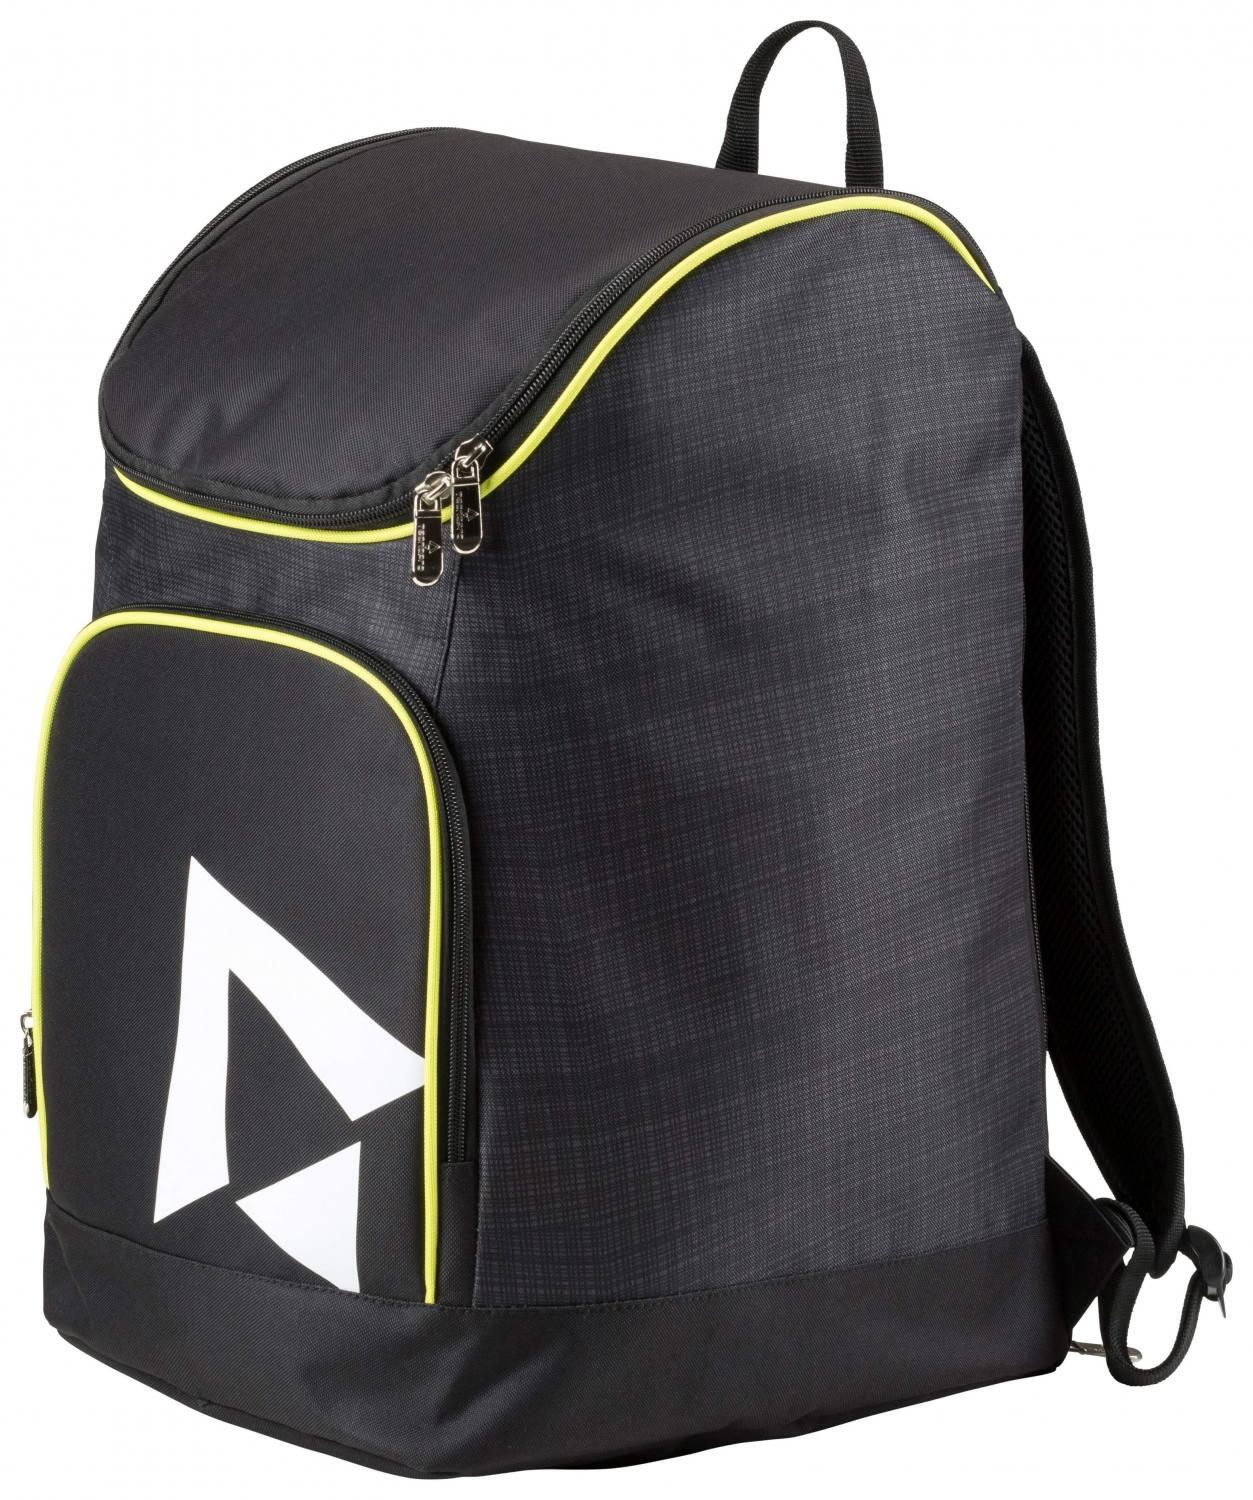 TecnoProBoot Bag Pack Skirucksack (901 black/yellow) von TecnoPro